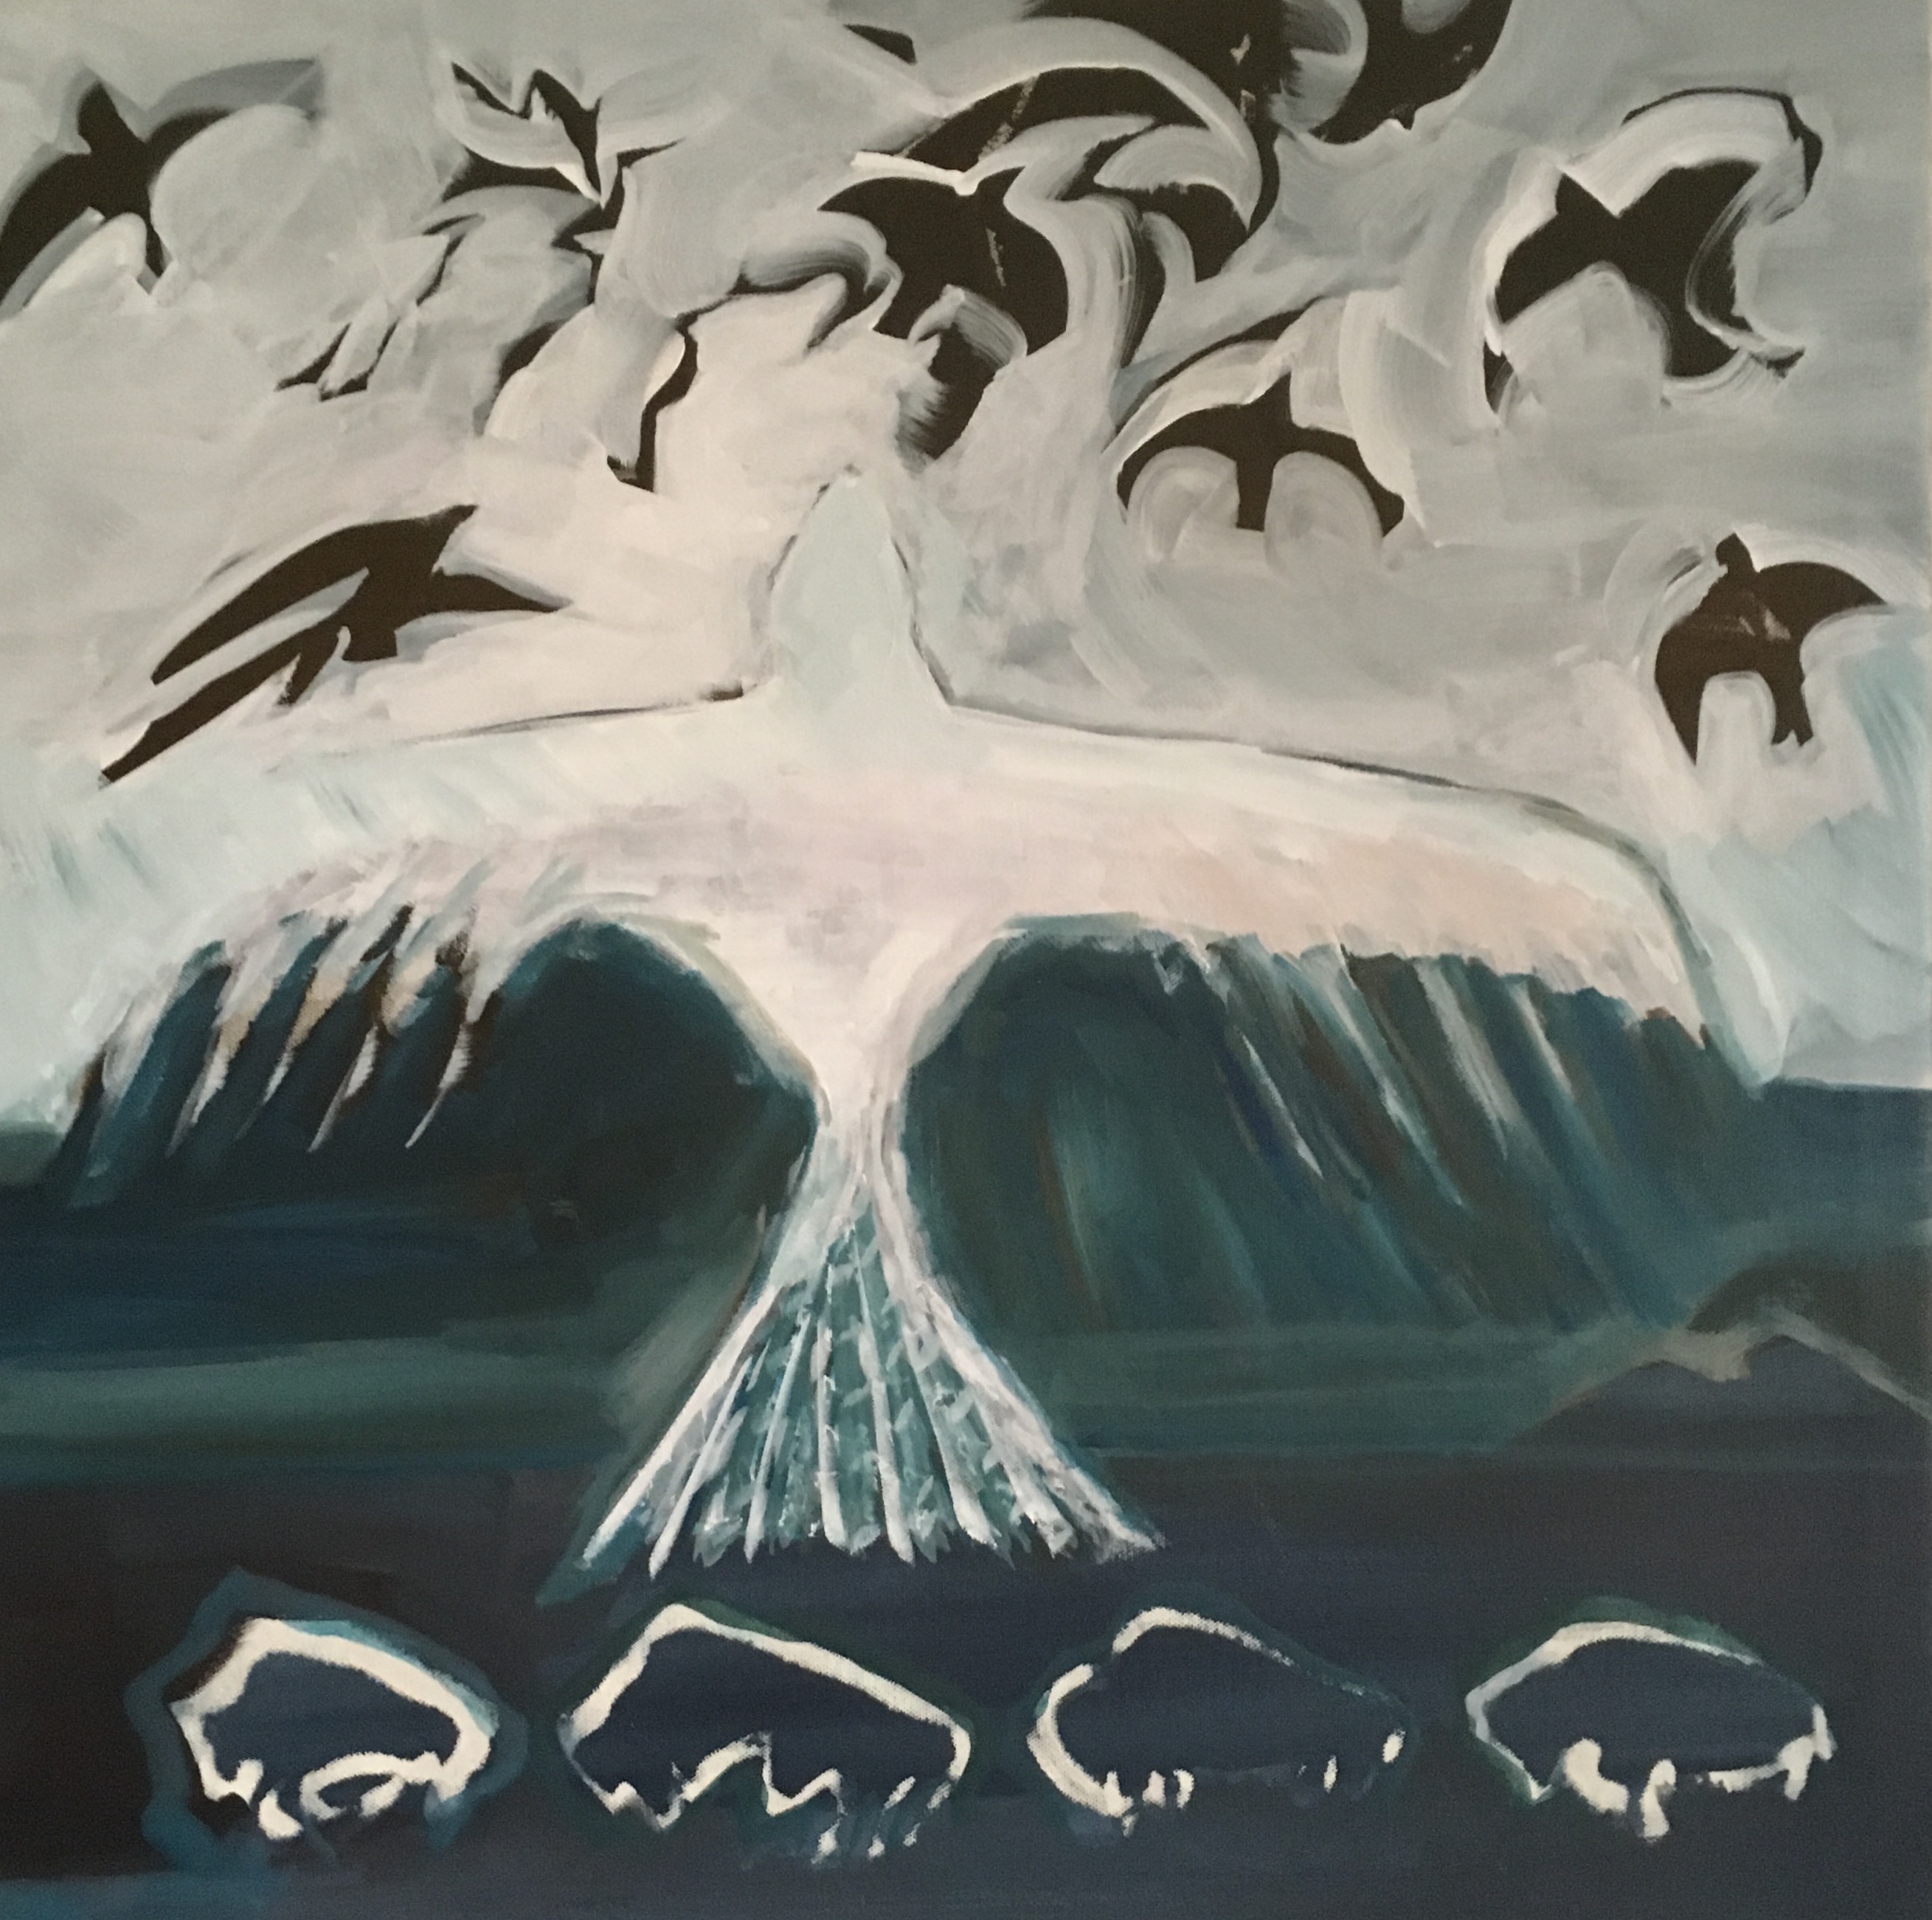 thunderbird by Kevan Krasnoff | ArtworkNetwork.com